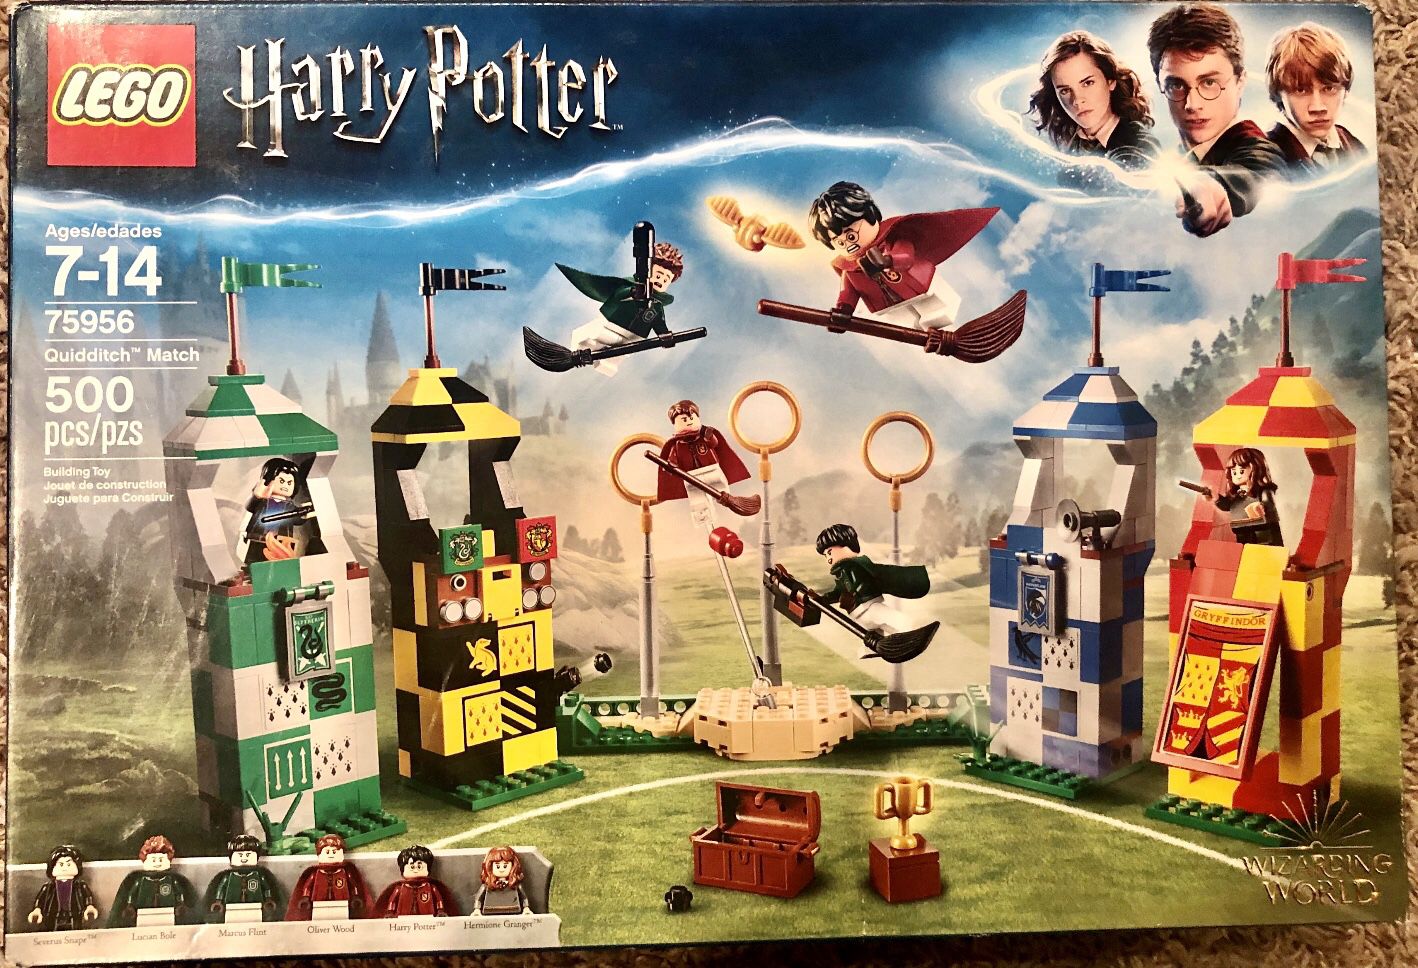 Lego Harry Potter Quidditch Match 75956 500 pcs